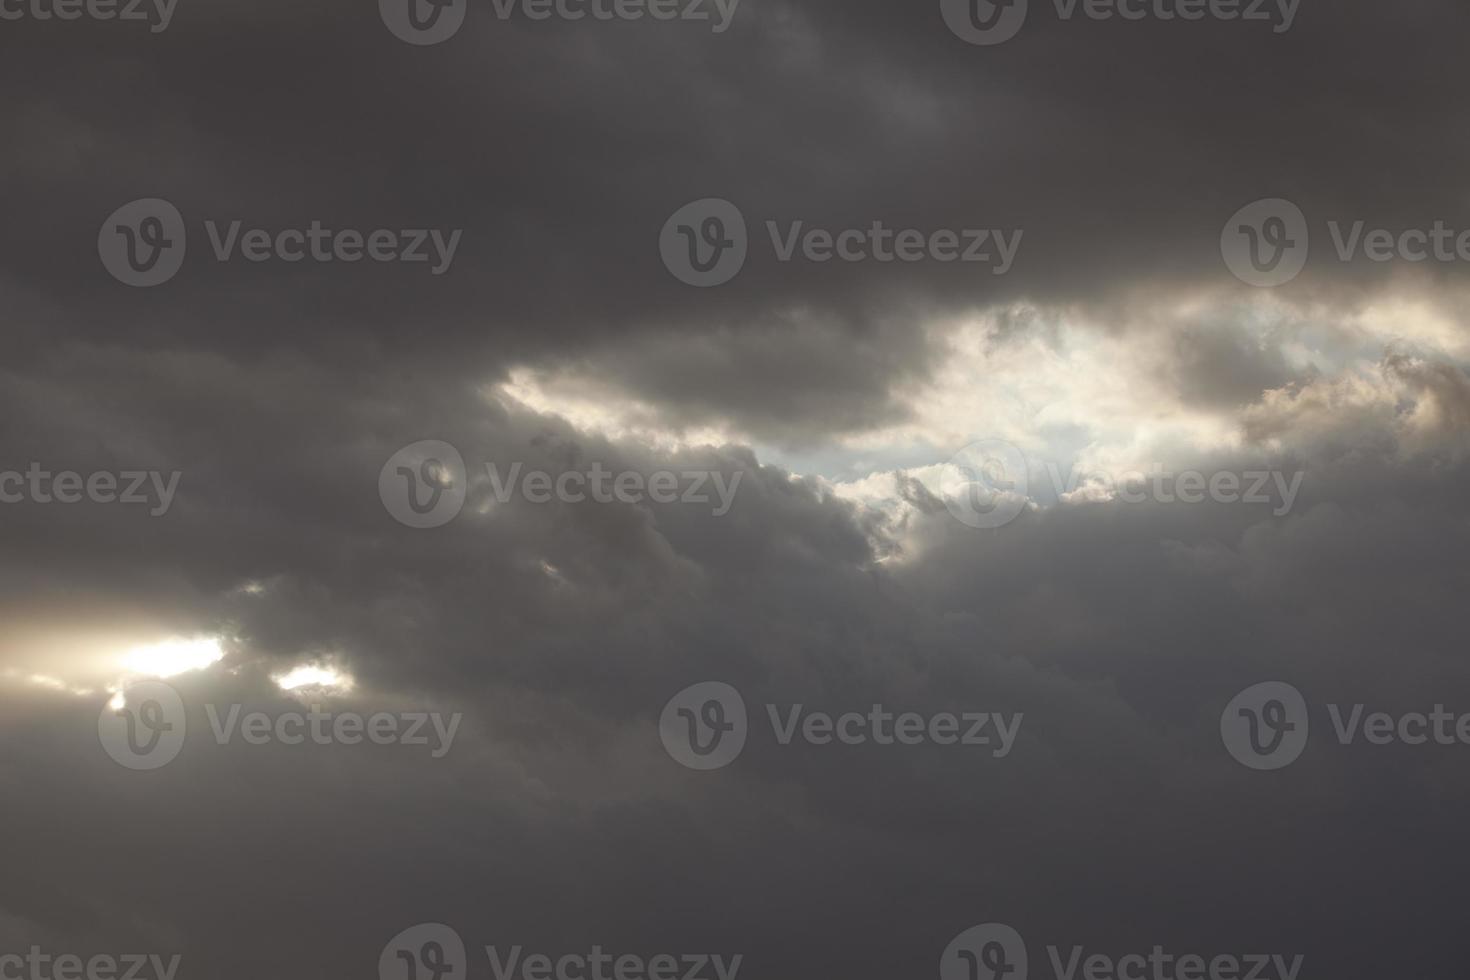 nuvole pazze in israele belle vedute della terra santa foto